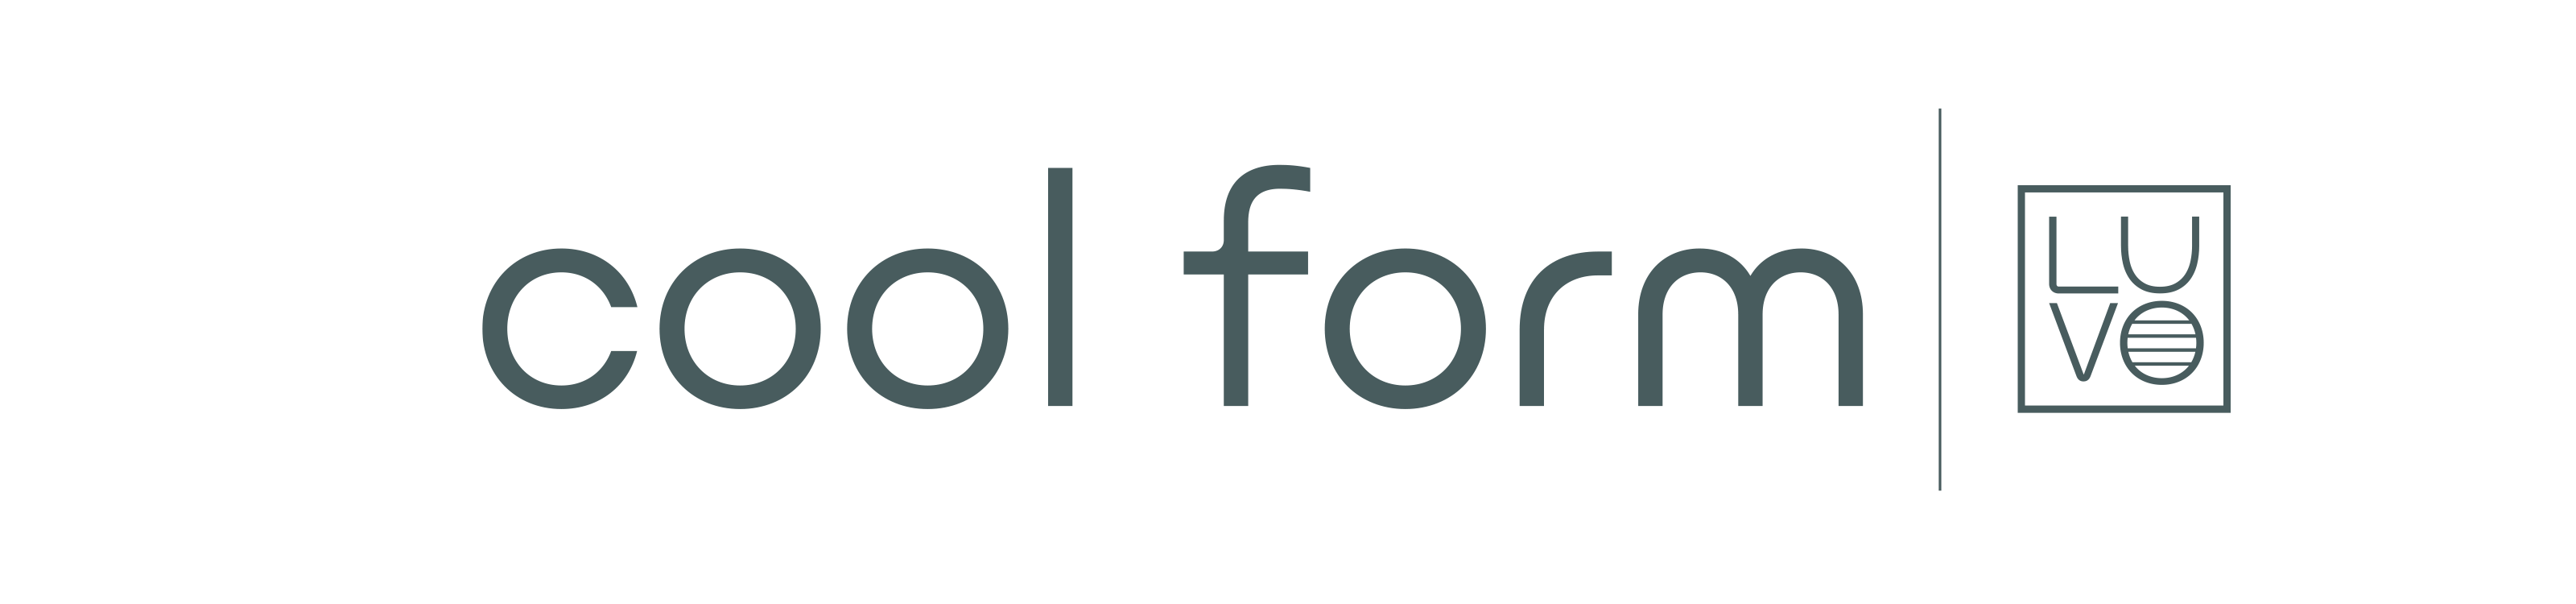 COOL FORM logo